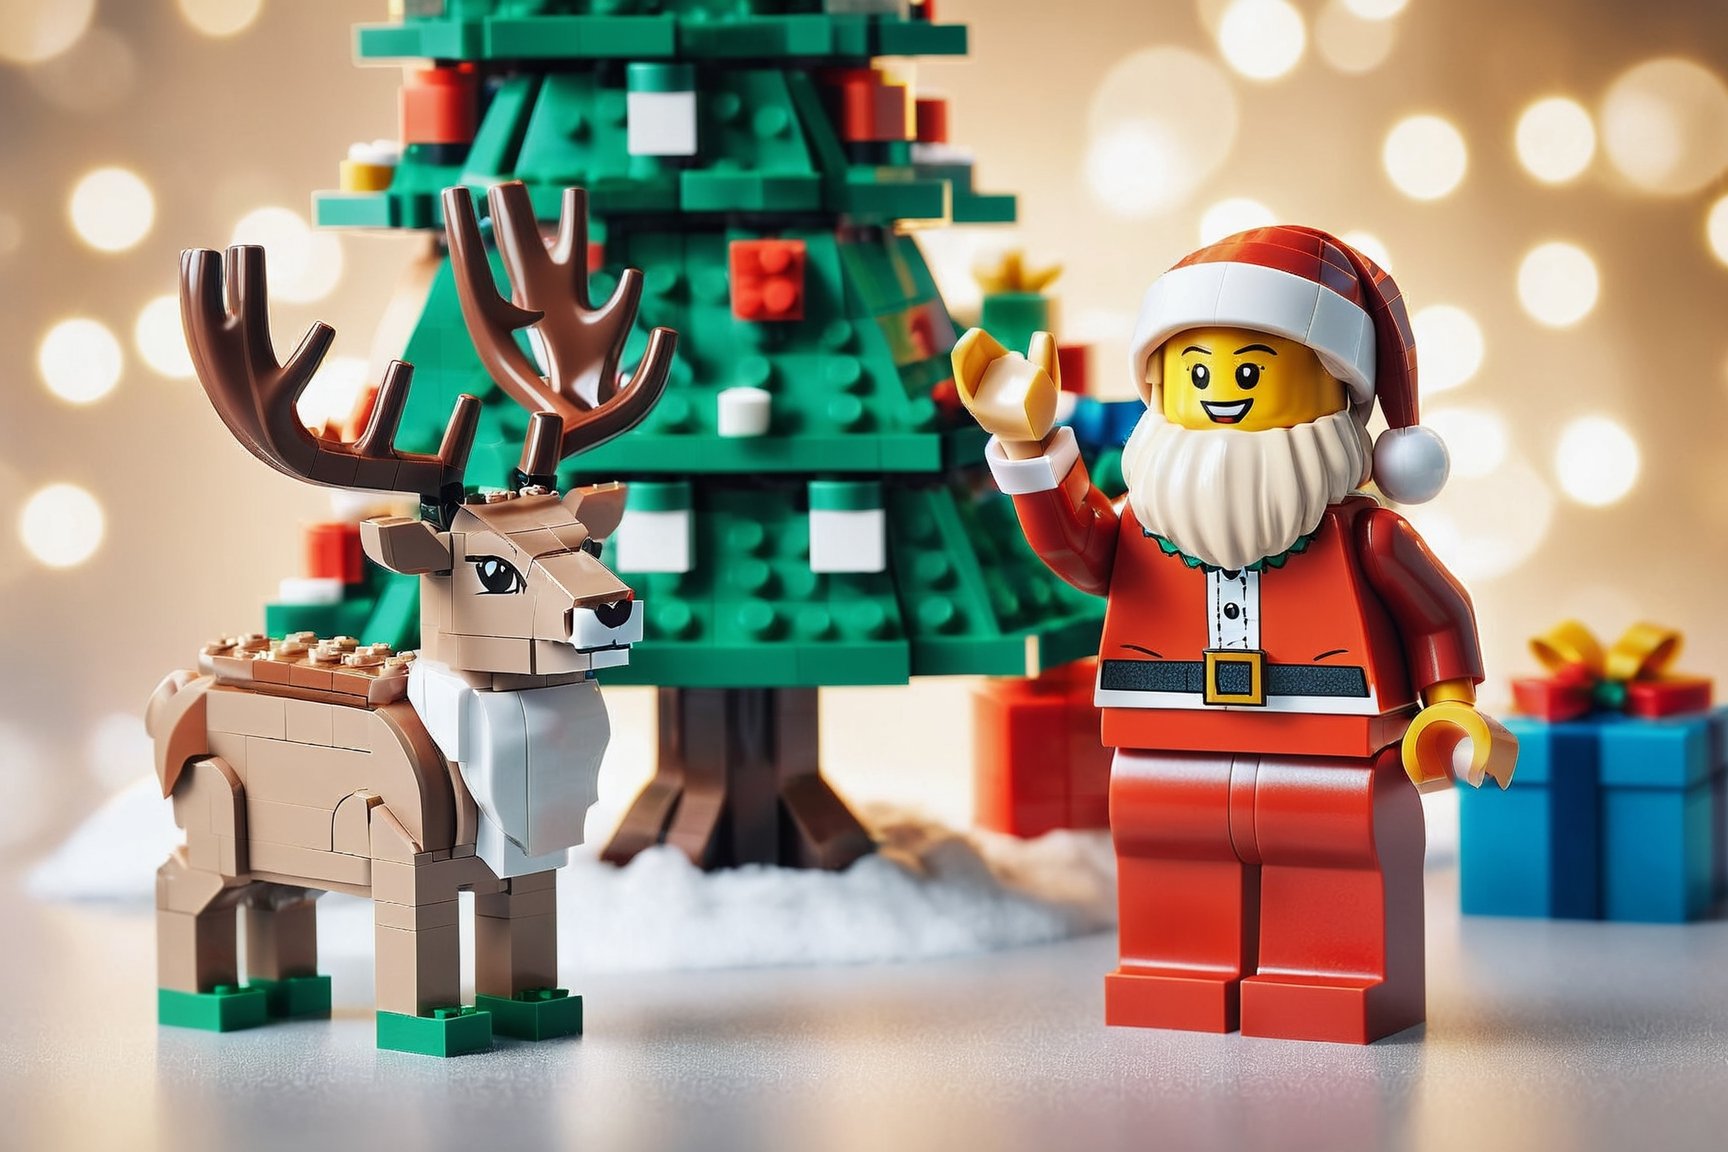 Lego santa clause celebrating christmas, reindeer, tree, presents,  background bokeh, christmas time